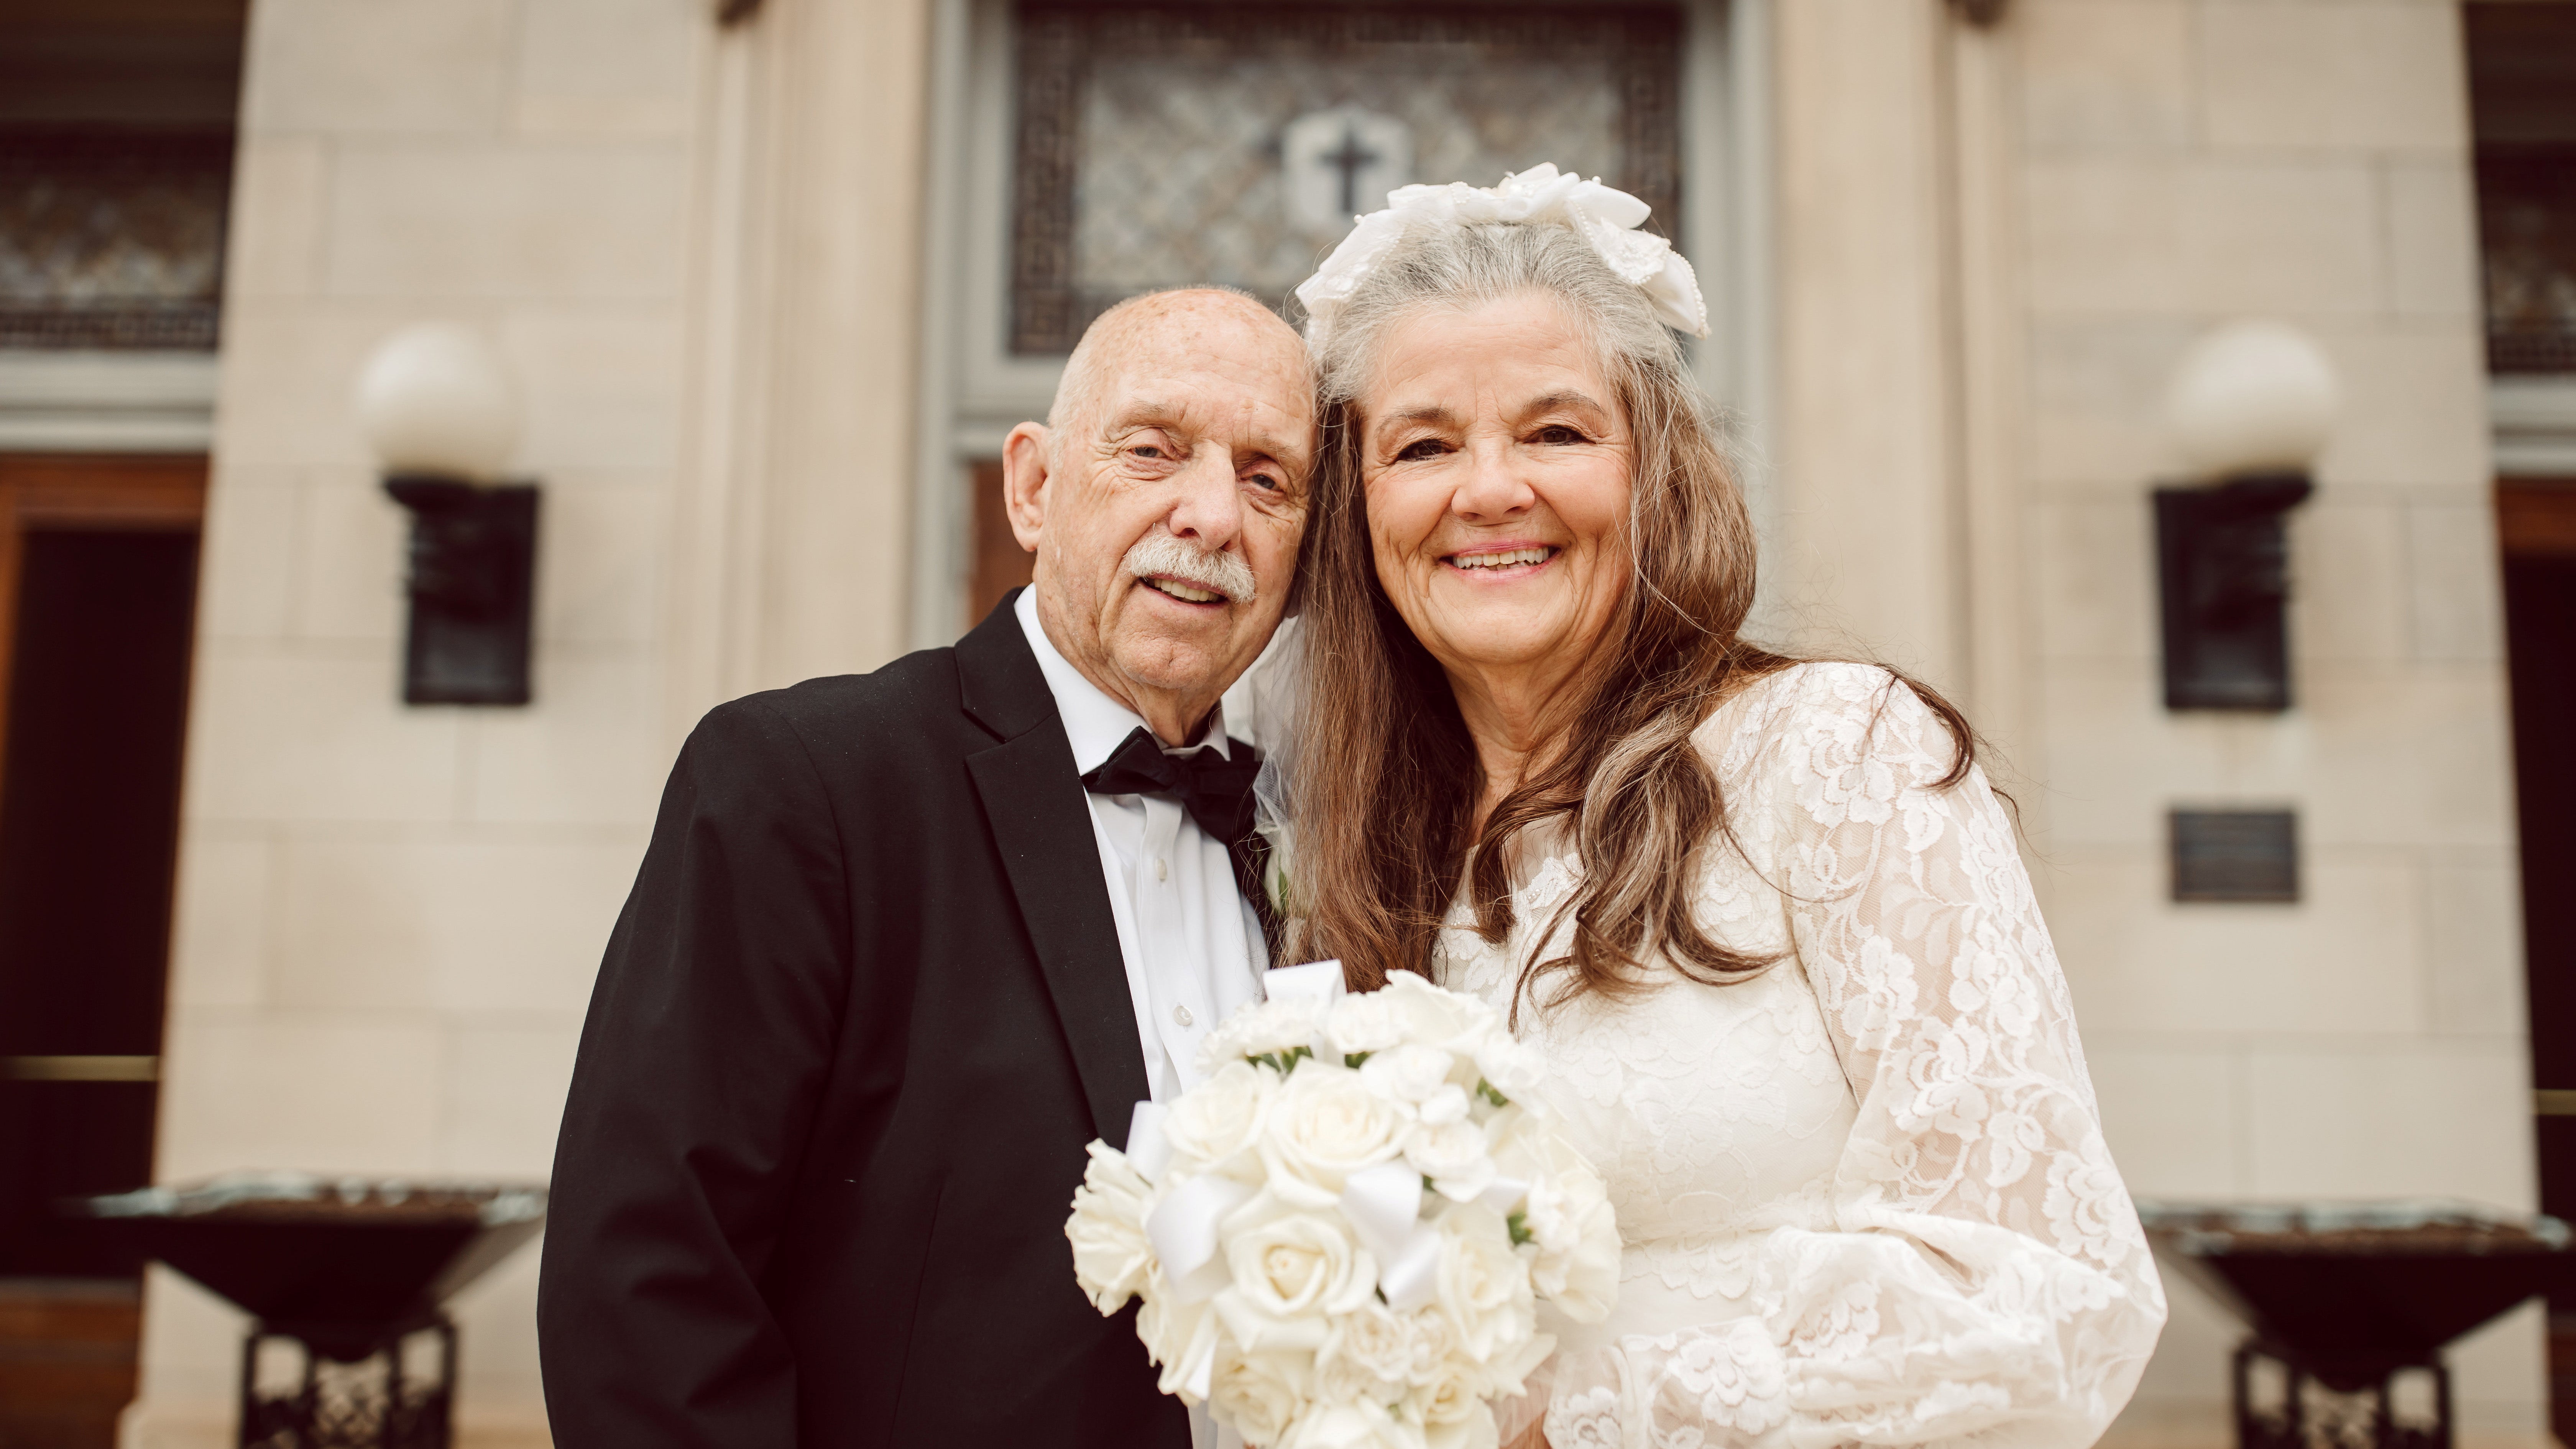 Iowa couple celebrates 50th anniversary by recreating wedding photos at the same church